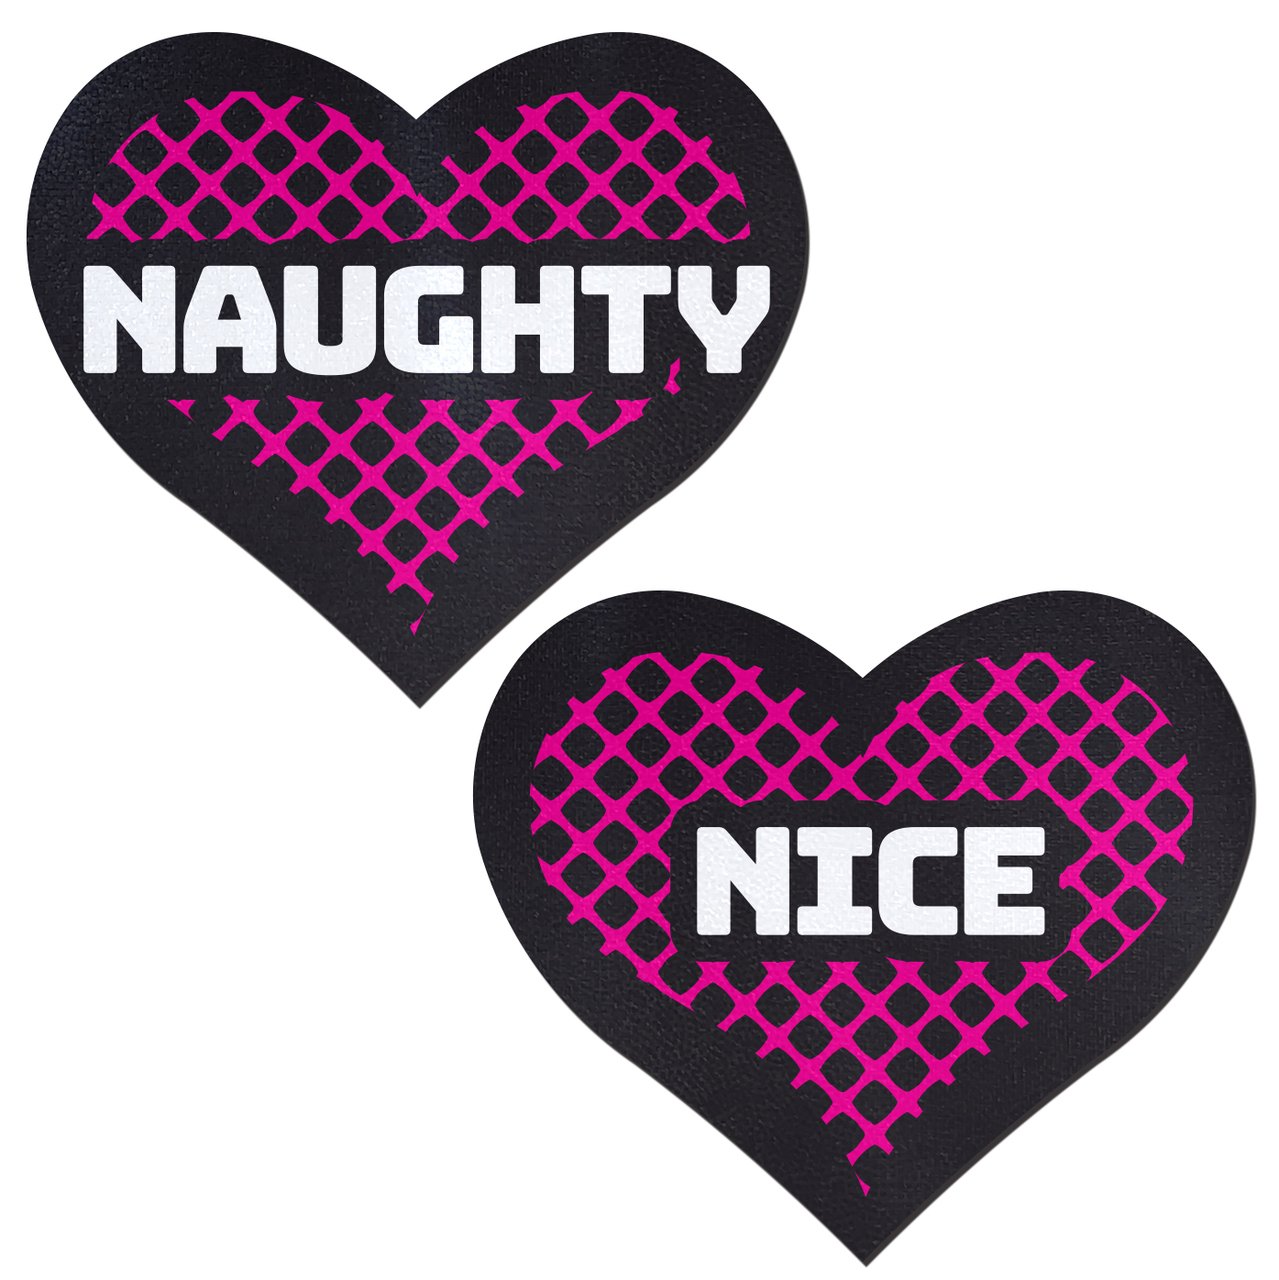 Naughty Nice Heart Pasties Blk/Pnk/Wht .